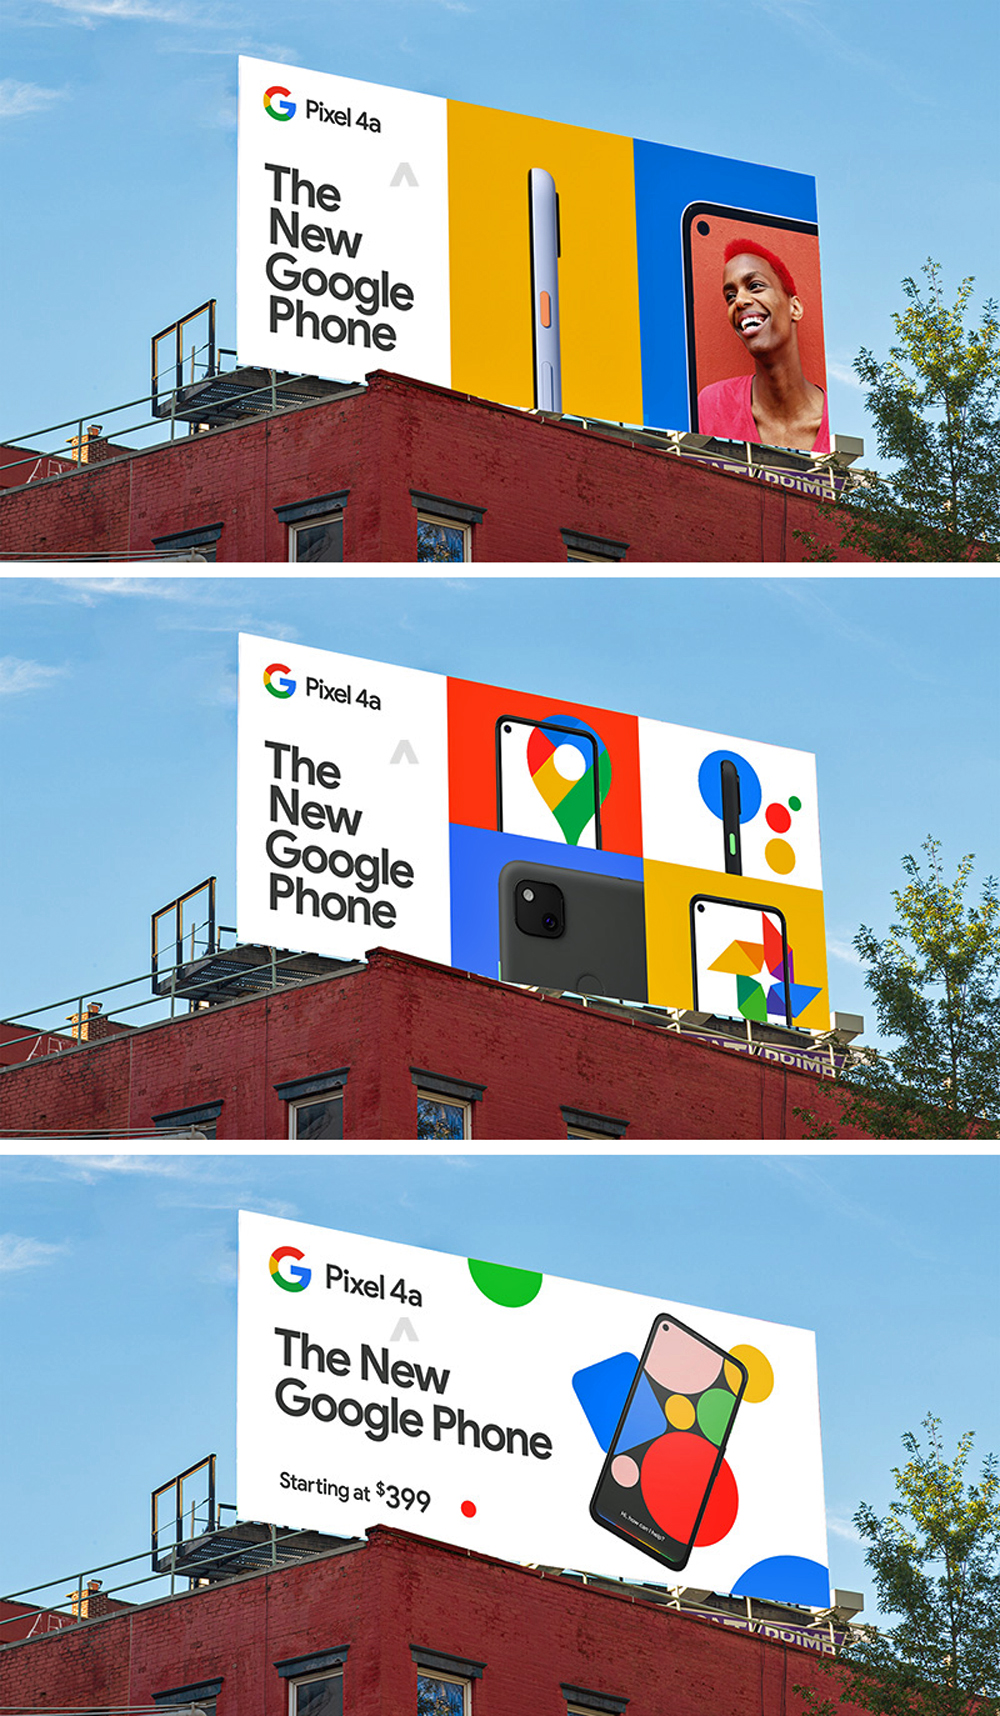 Google Pixel 4a rumored pricing